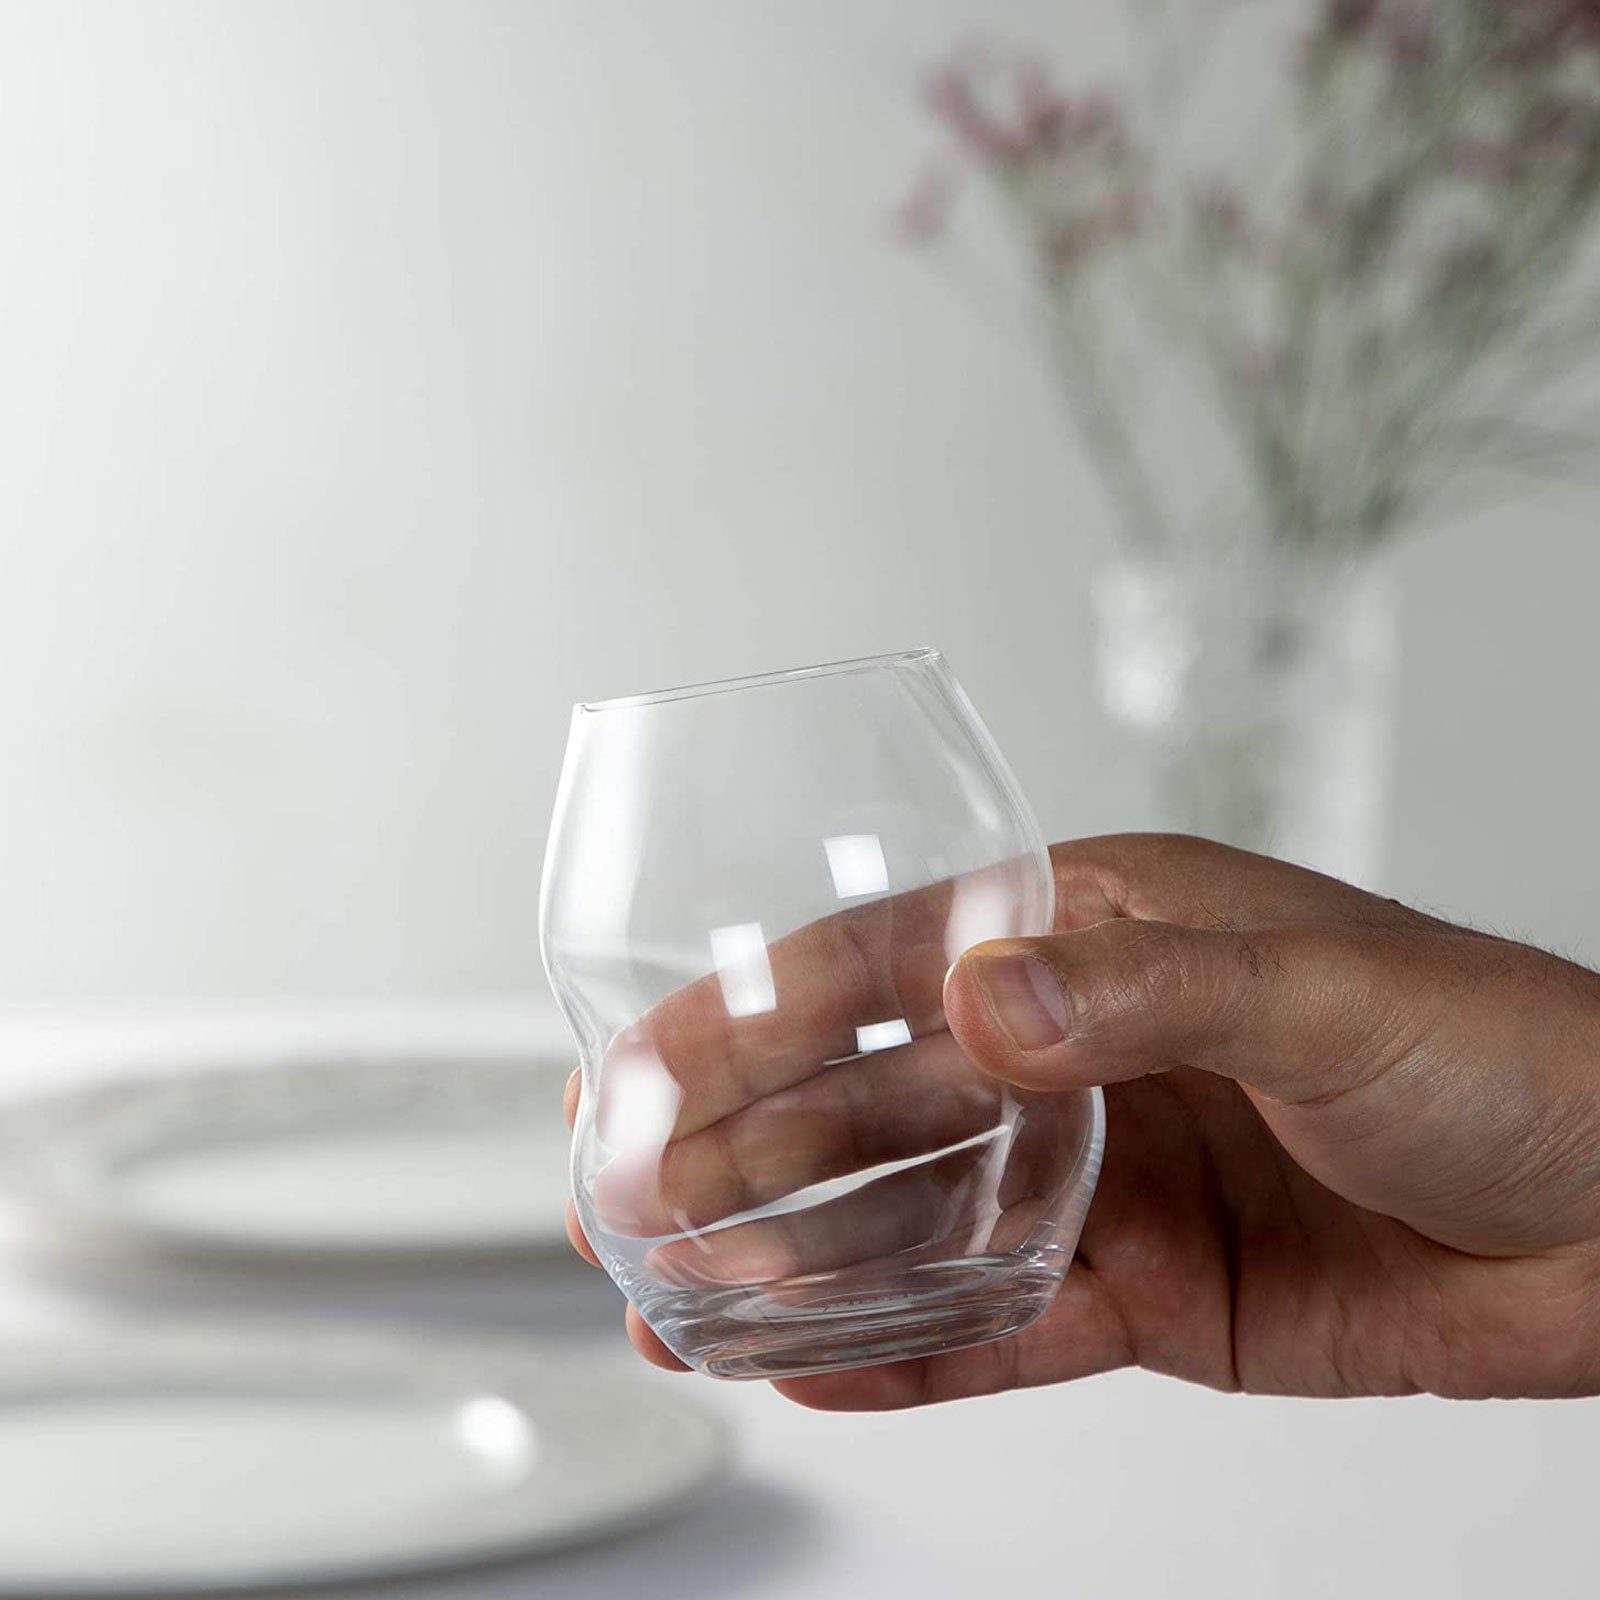 RIEDEL Swirl Weißweinglas, Glas Kristallglas Glas